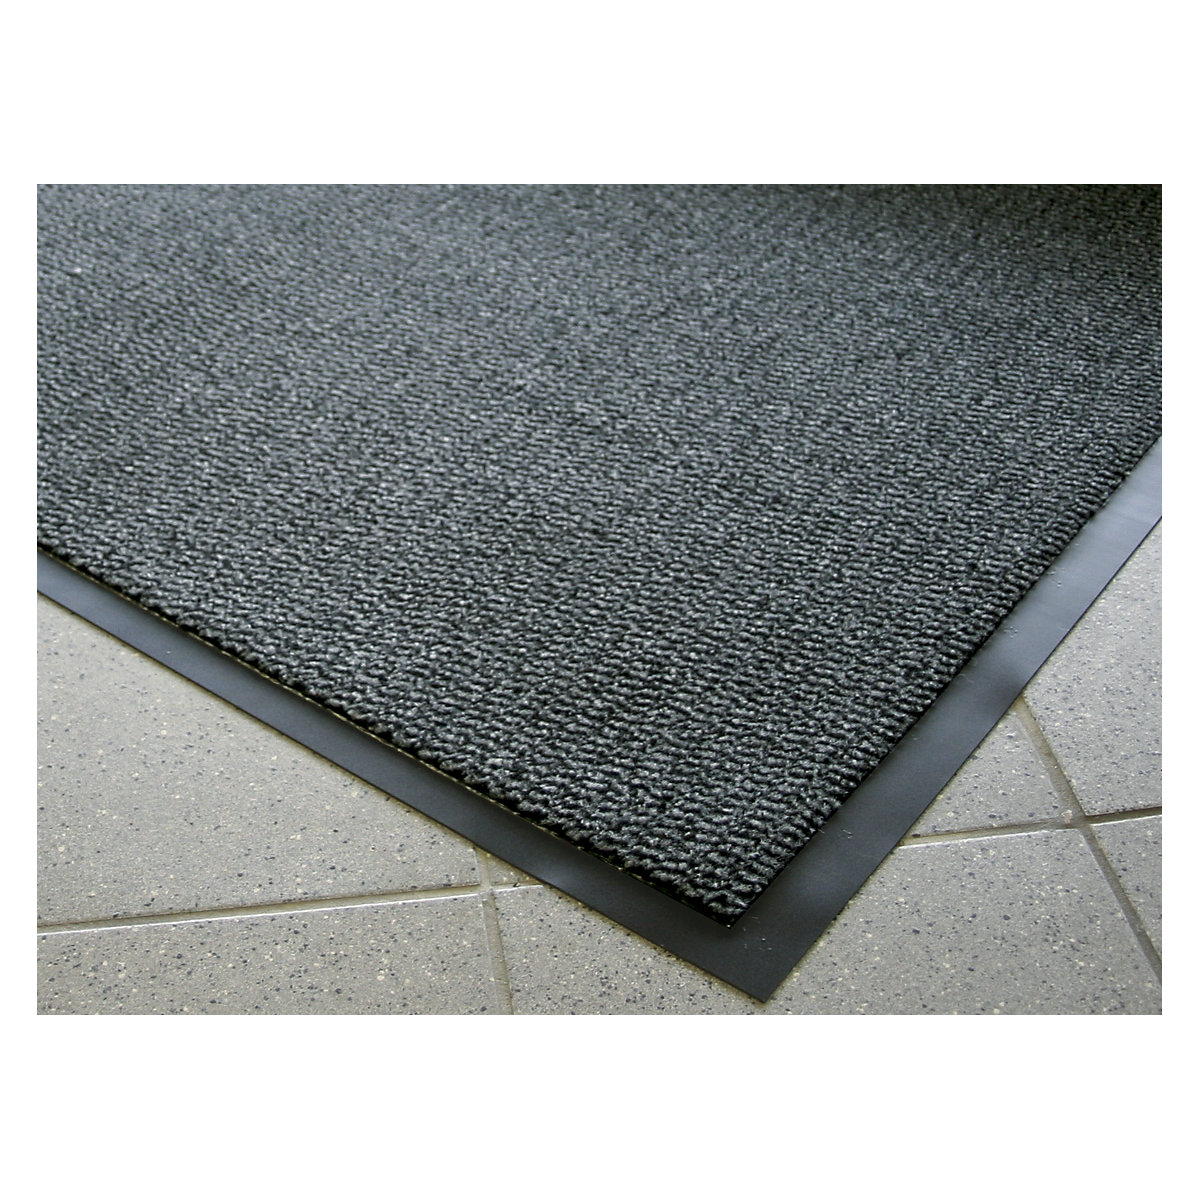 Entrance matting for indoor use, polypropylene pile, LxW 1200 x 900 mm, black / metallic